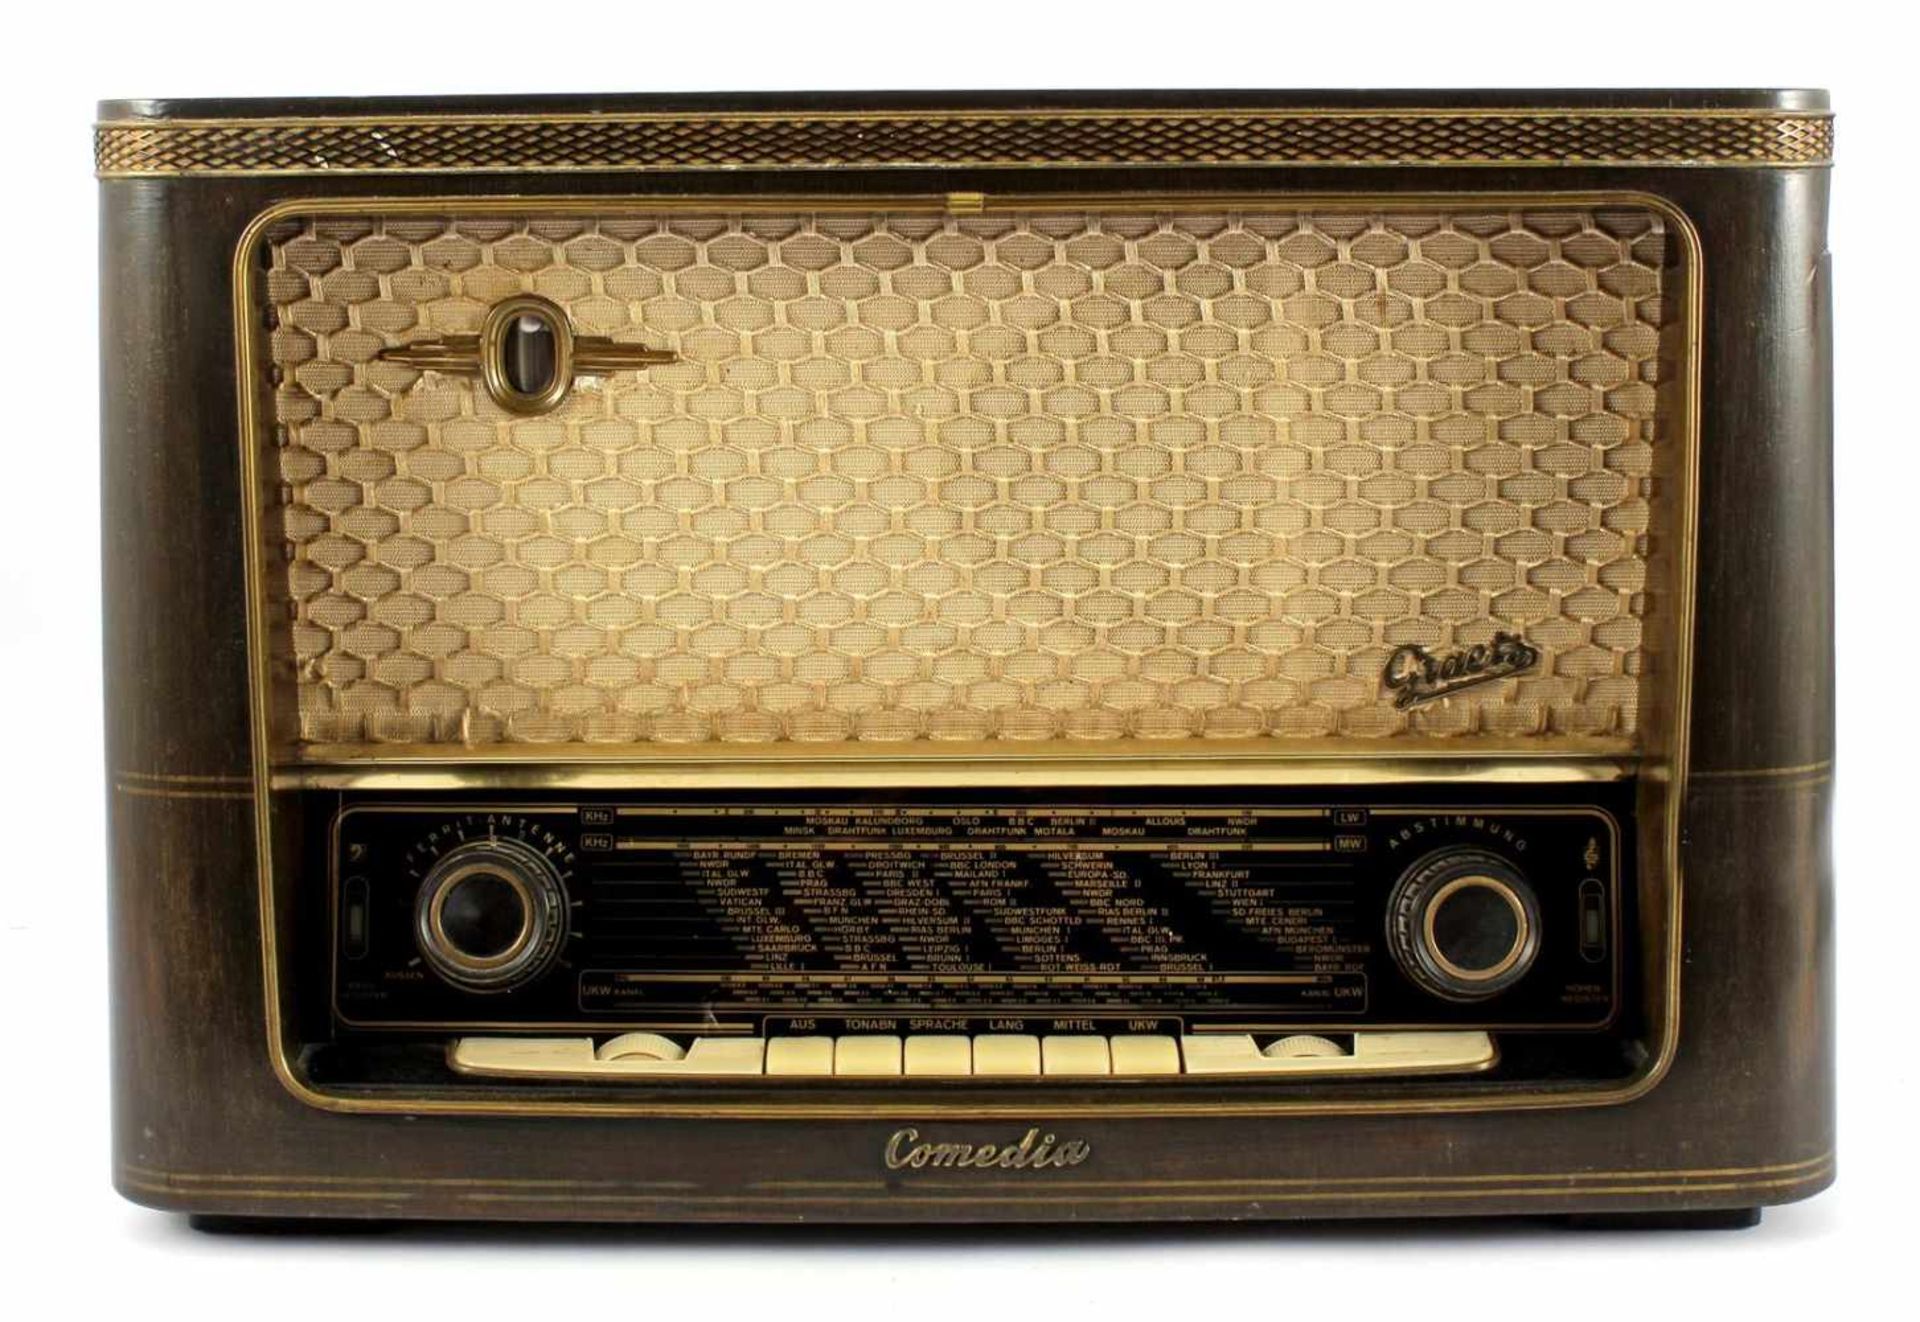 Graetz radio in wooden cabinet, type Comedia R / 216, 1950s, 36 cm high, 56 cm wide, 25 cm deep